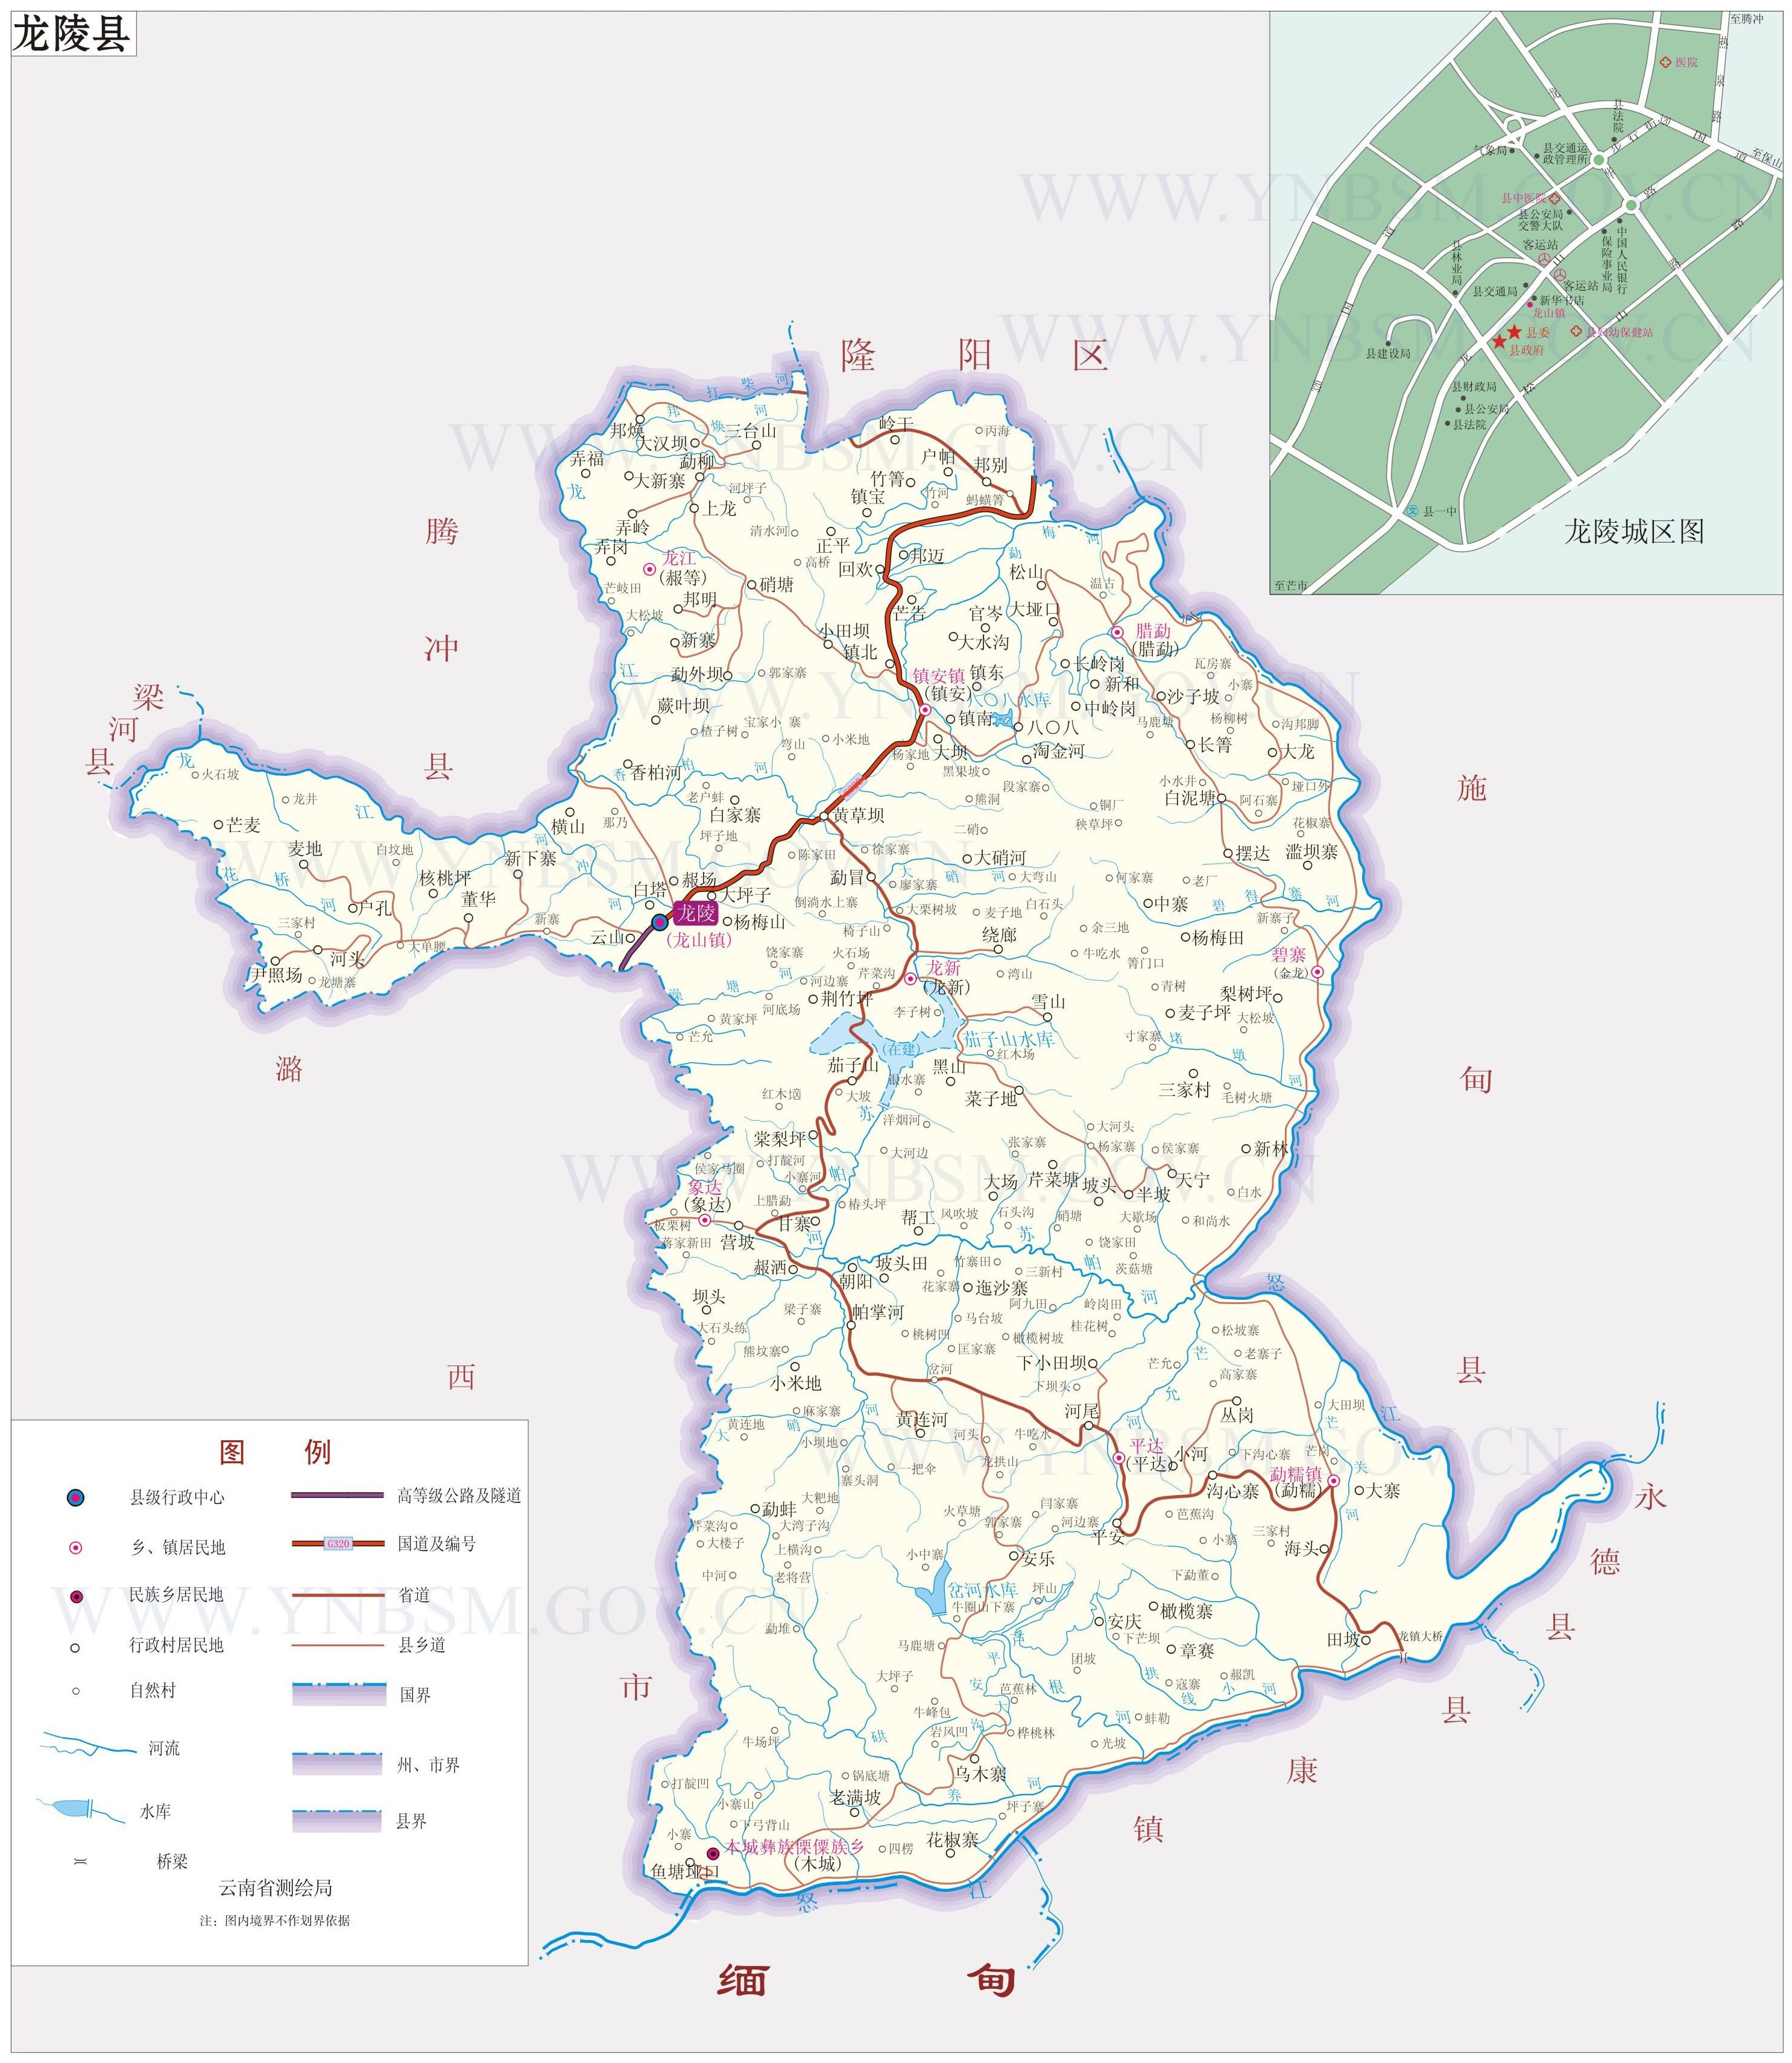 g56高速532公里是什么地方途经贵州铜仁市6个区县,25个乡镇,73个行政图片